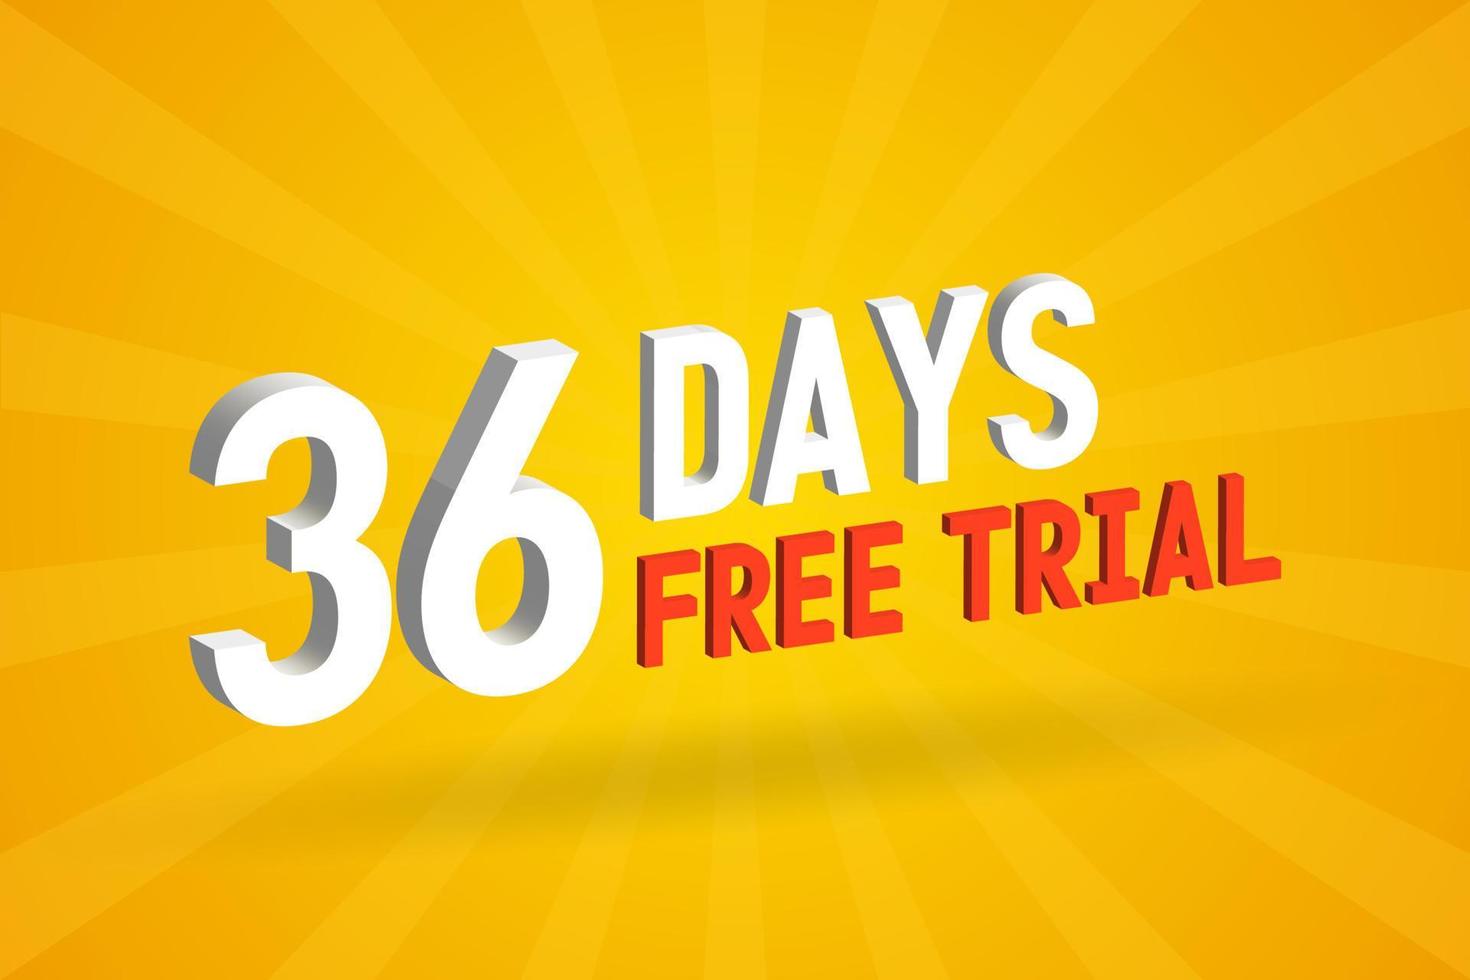 oferta gratuita 36 días de prueba gratuita texto 3d stock vector